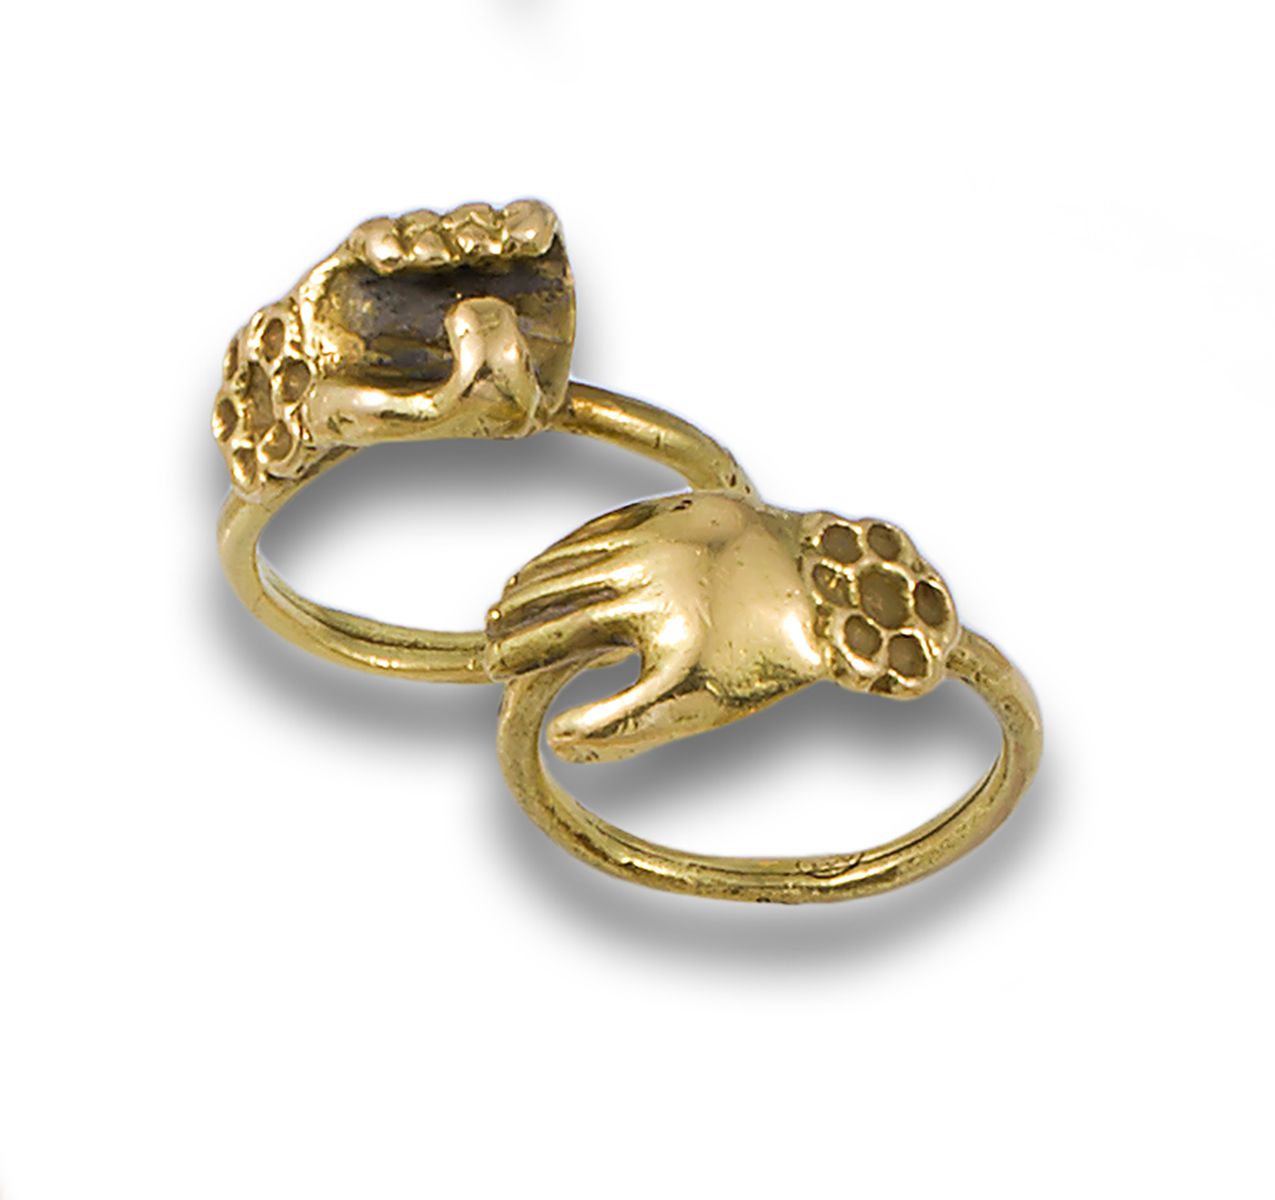 TWO YELLOW GOLD HAND RINGS 一套两个18K黄金手环 ....